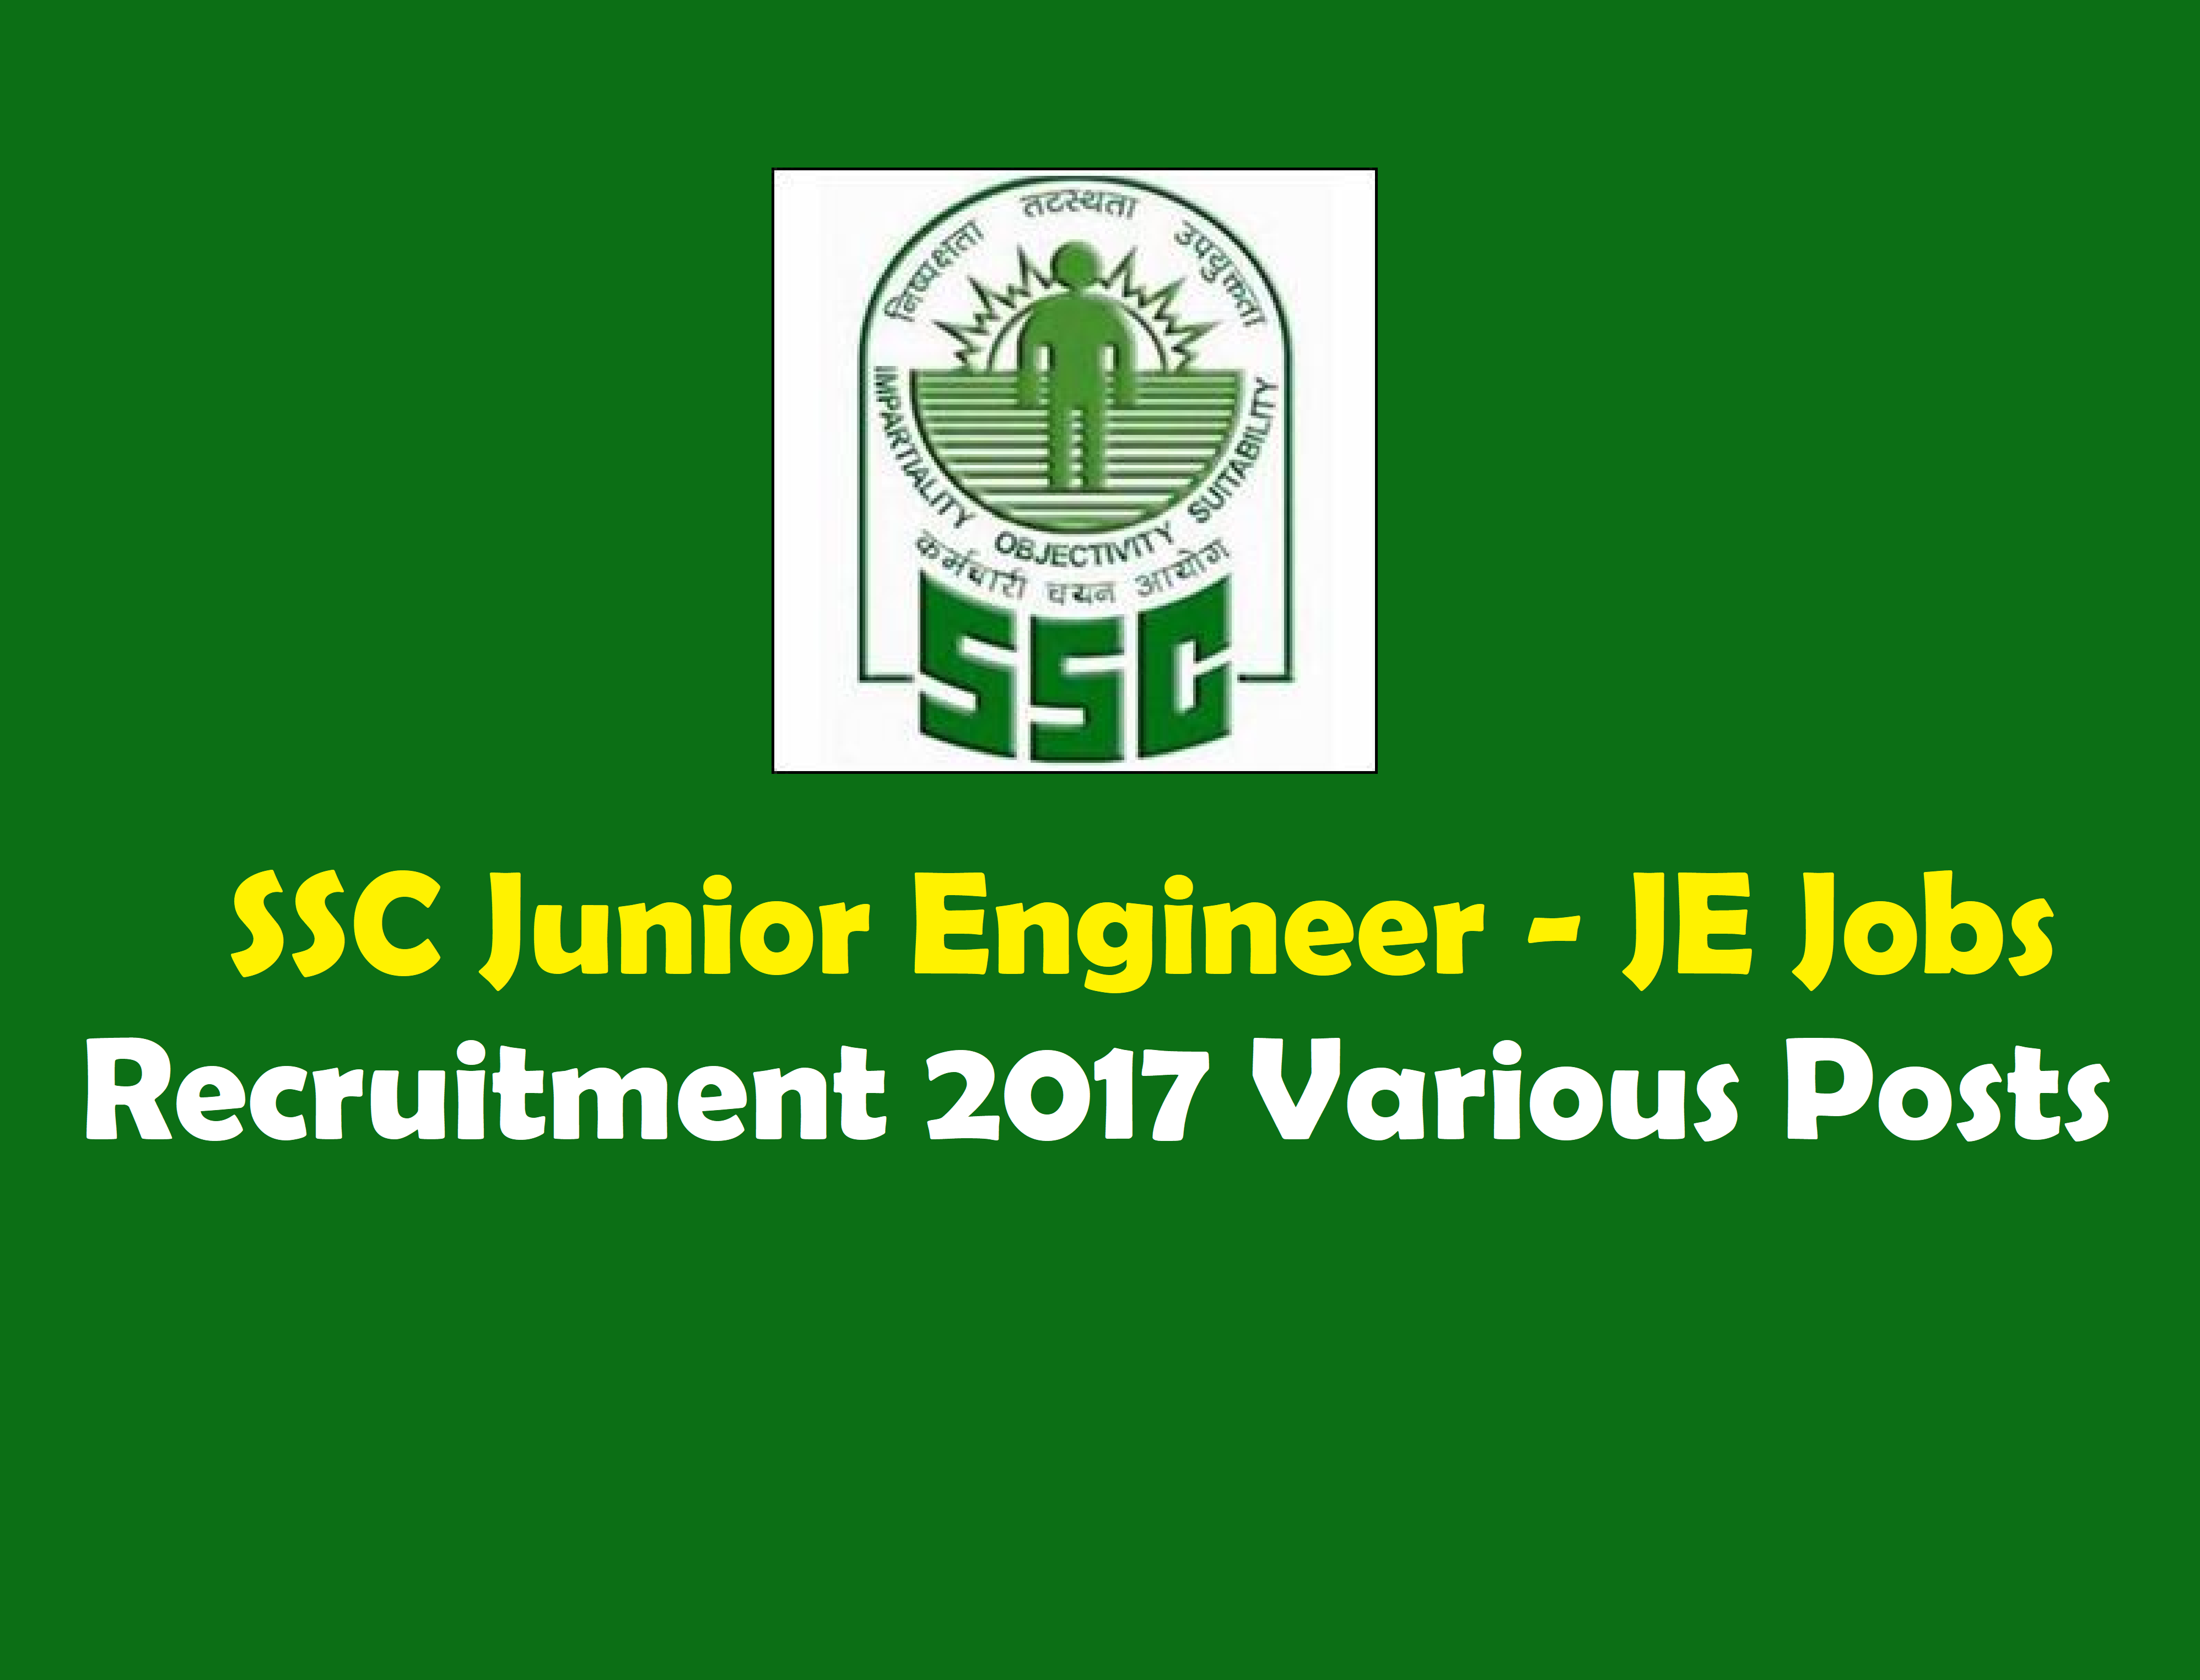 SSC Junior Engineer JE Recruitment 2017